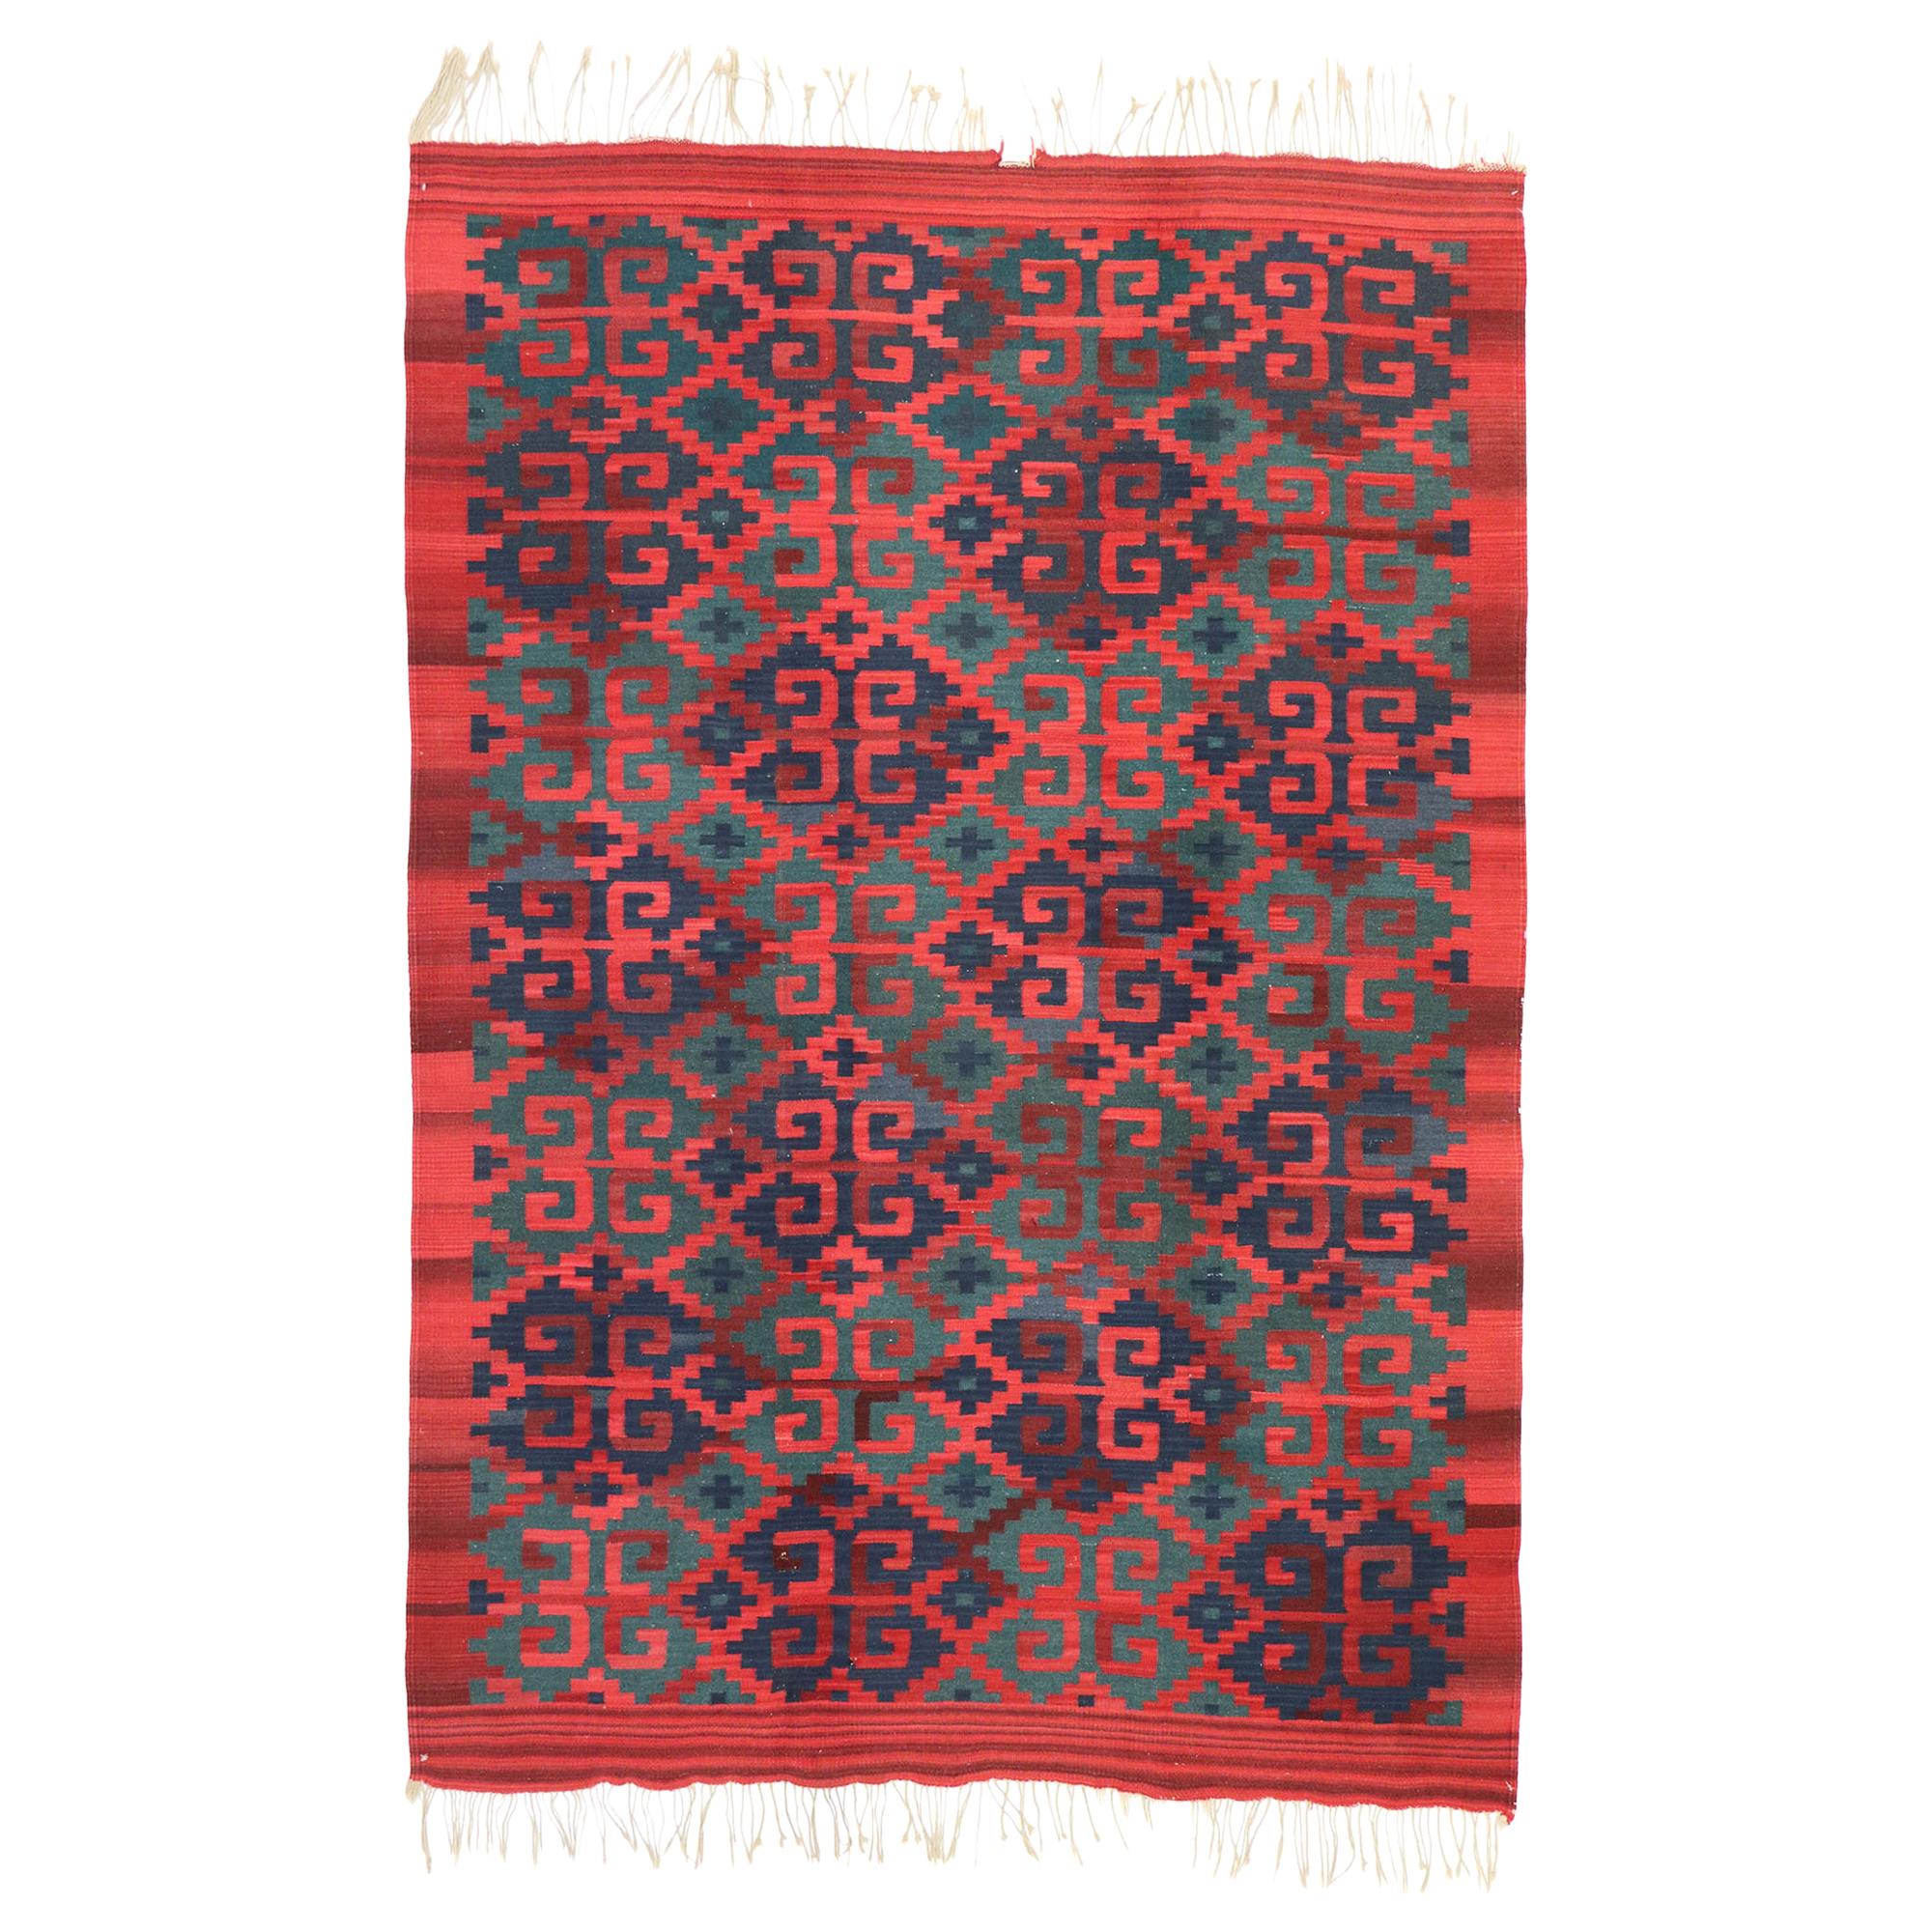 Vintage Persian Kilim Rug with Modern Northwestern Tribal Style